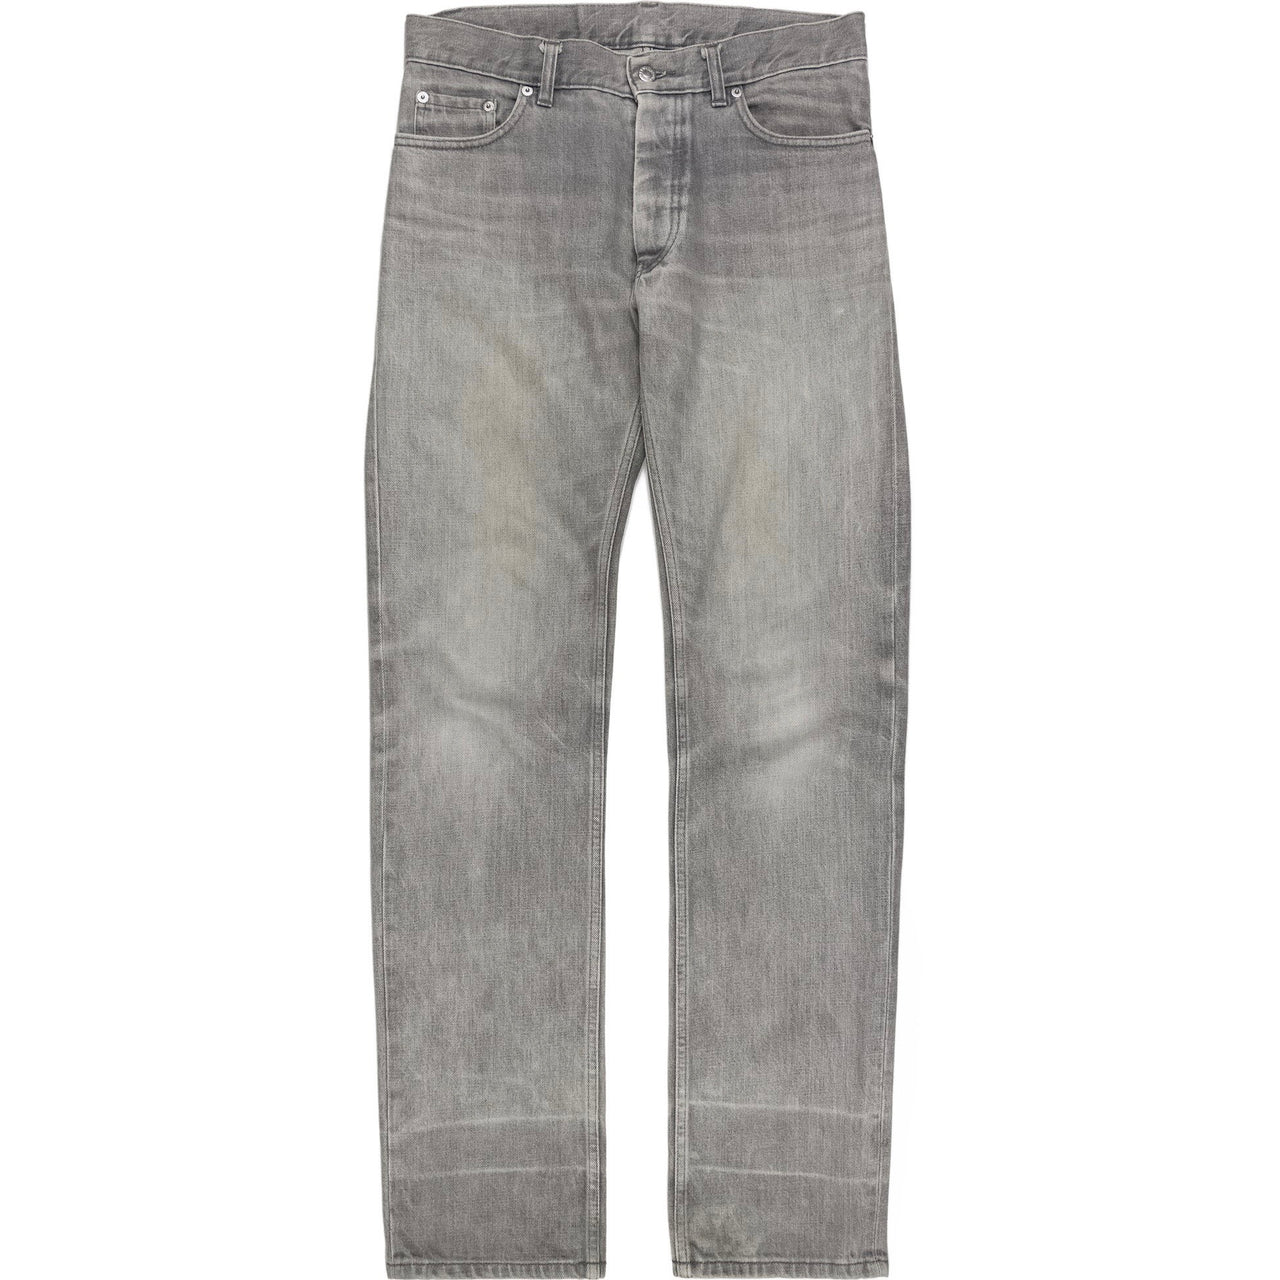 Helmut Lang Charcoal Grey Denim Jeans